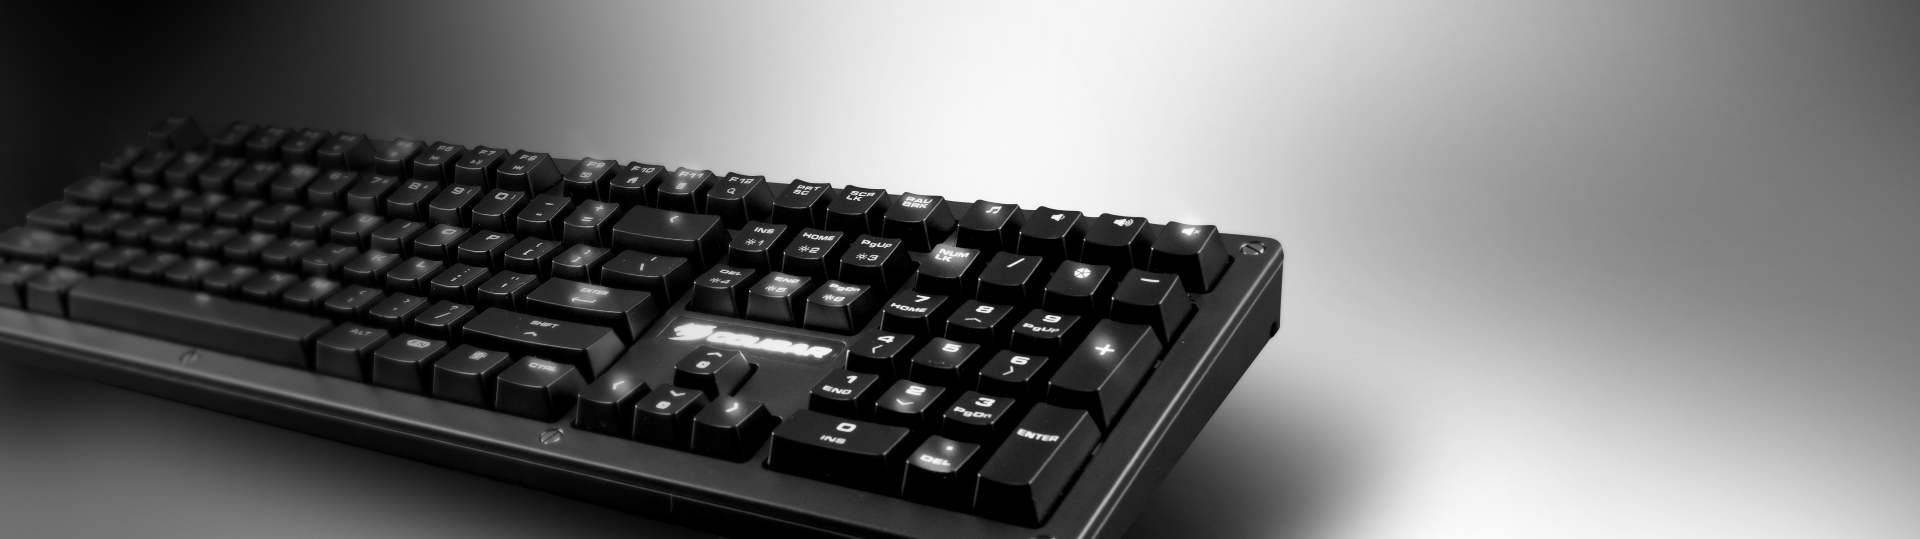 COUGAR PURI - Cherry MX Mechanical Gaming Keyboard